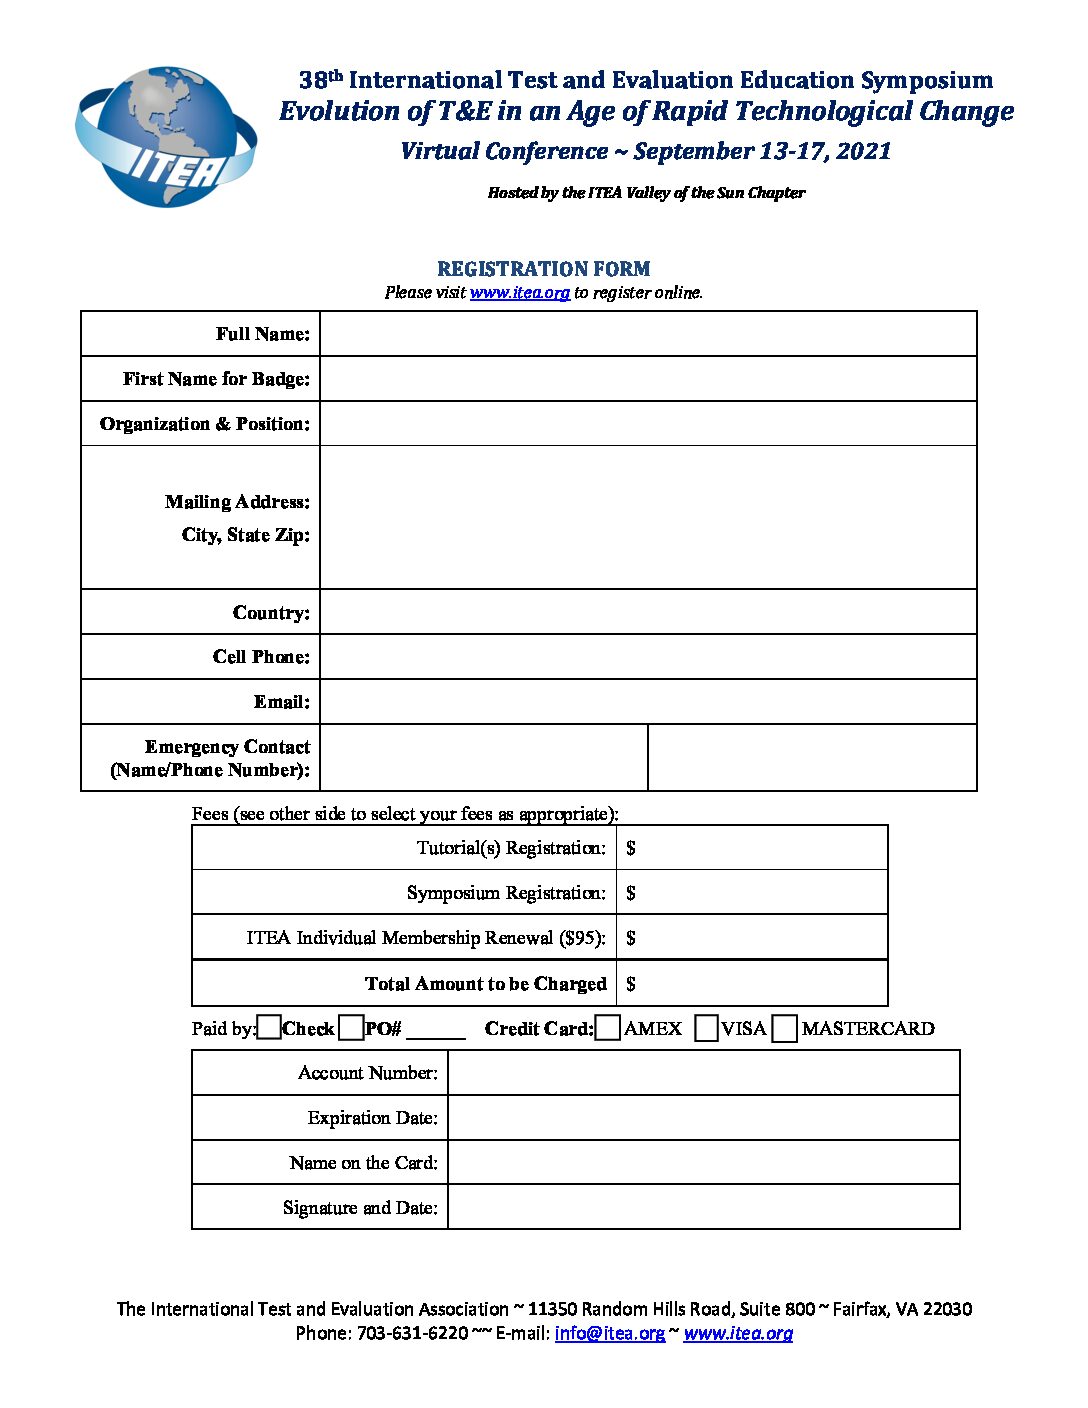 2021 Symposium Registration Form